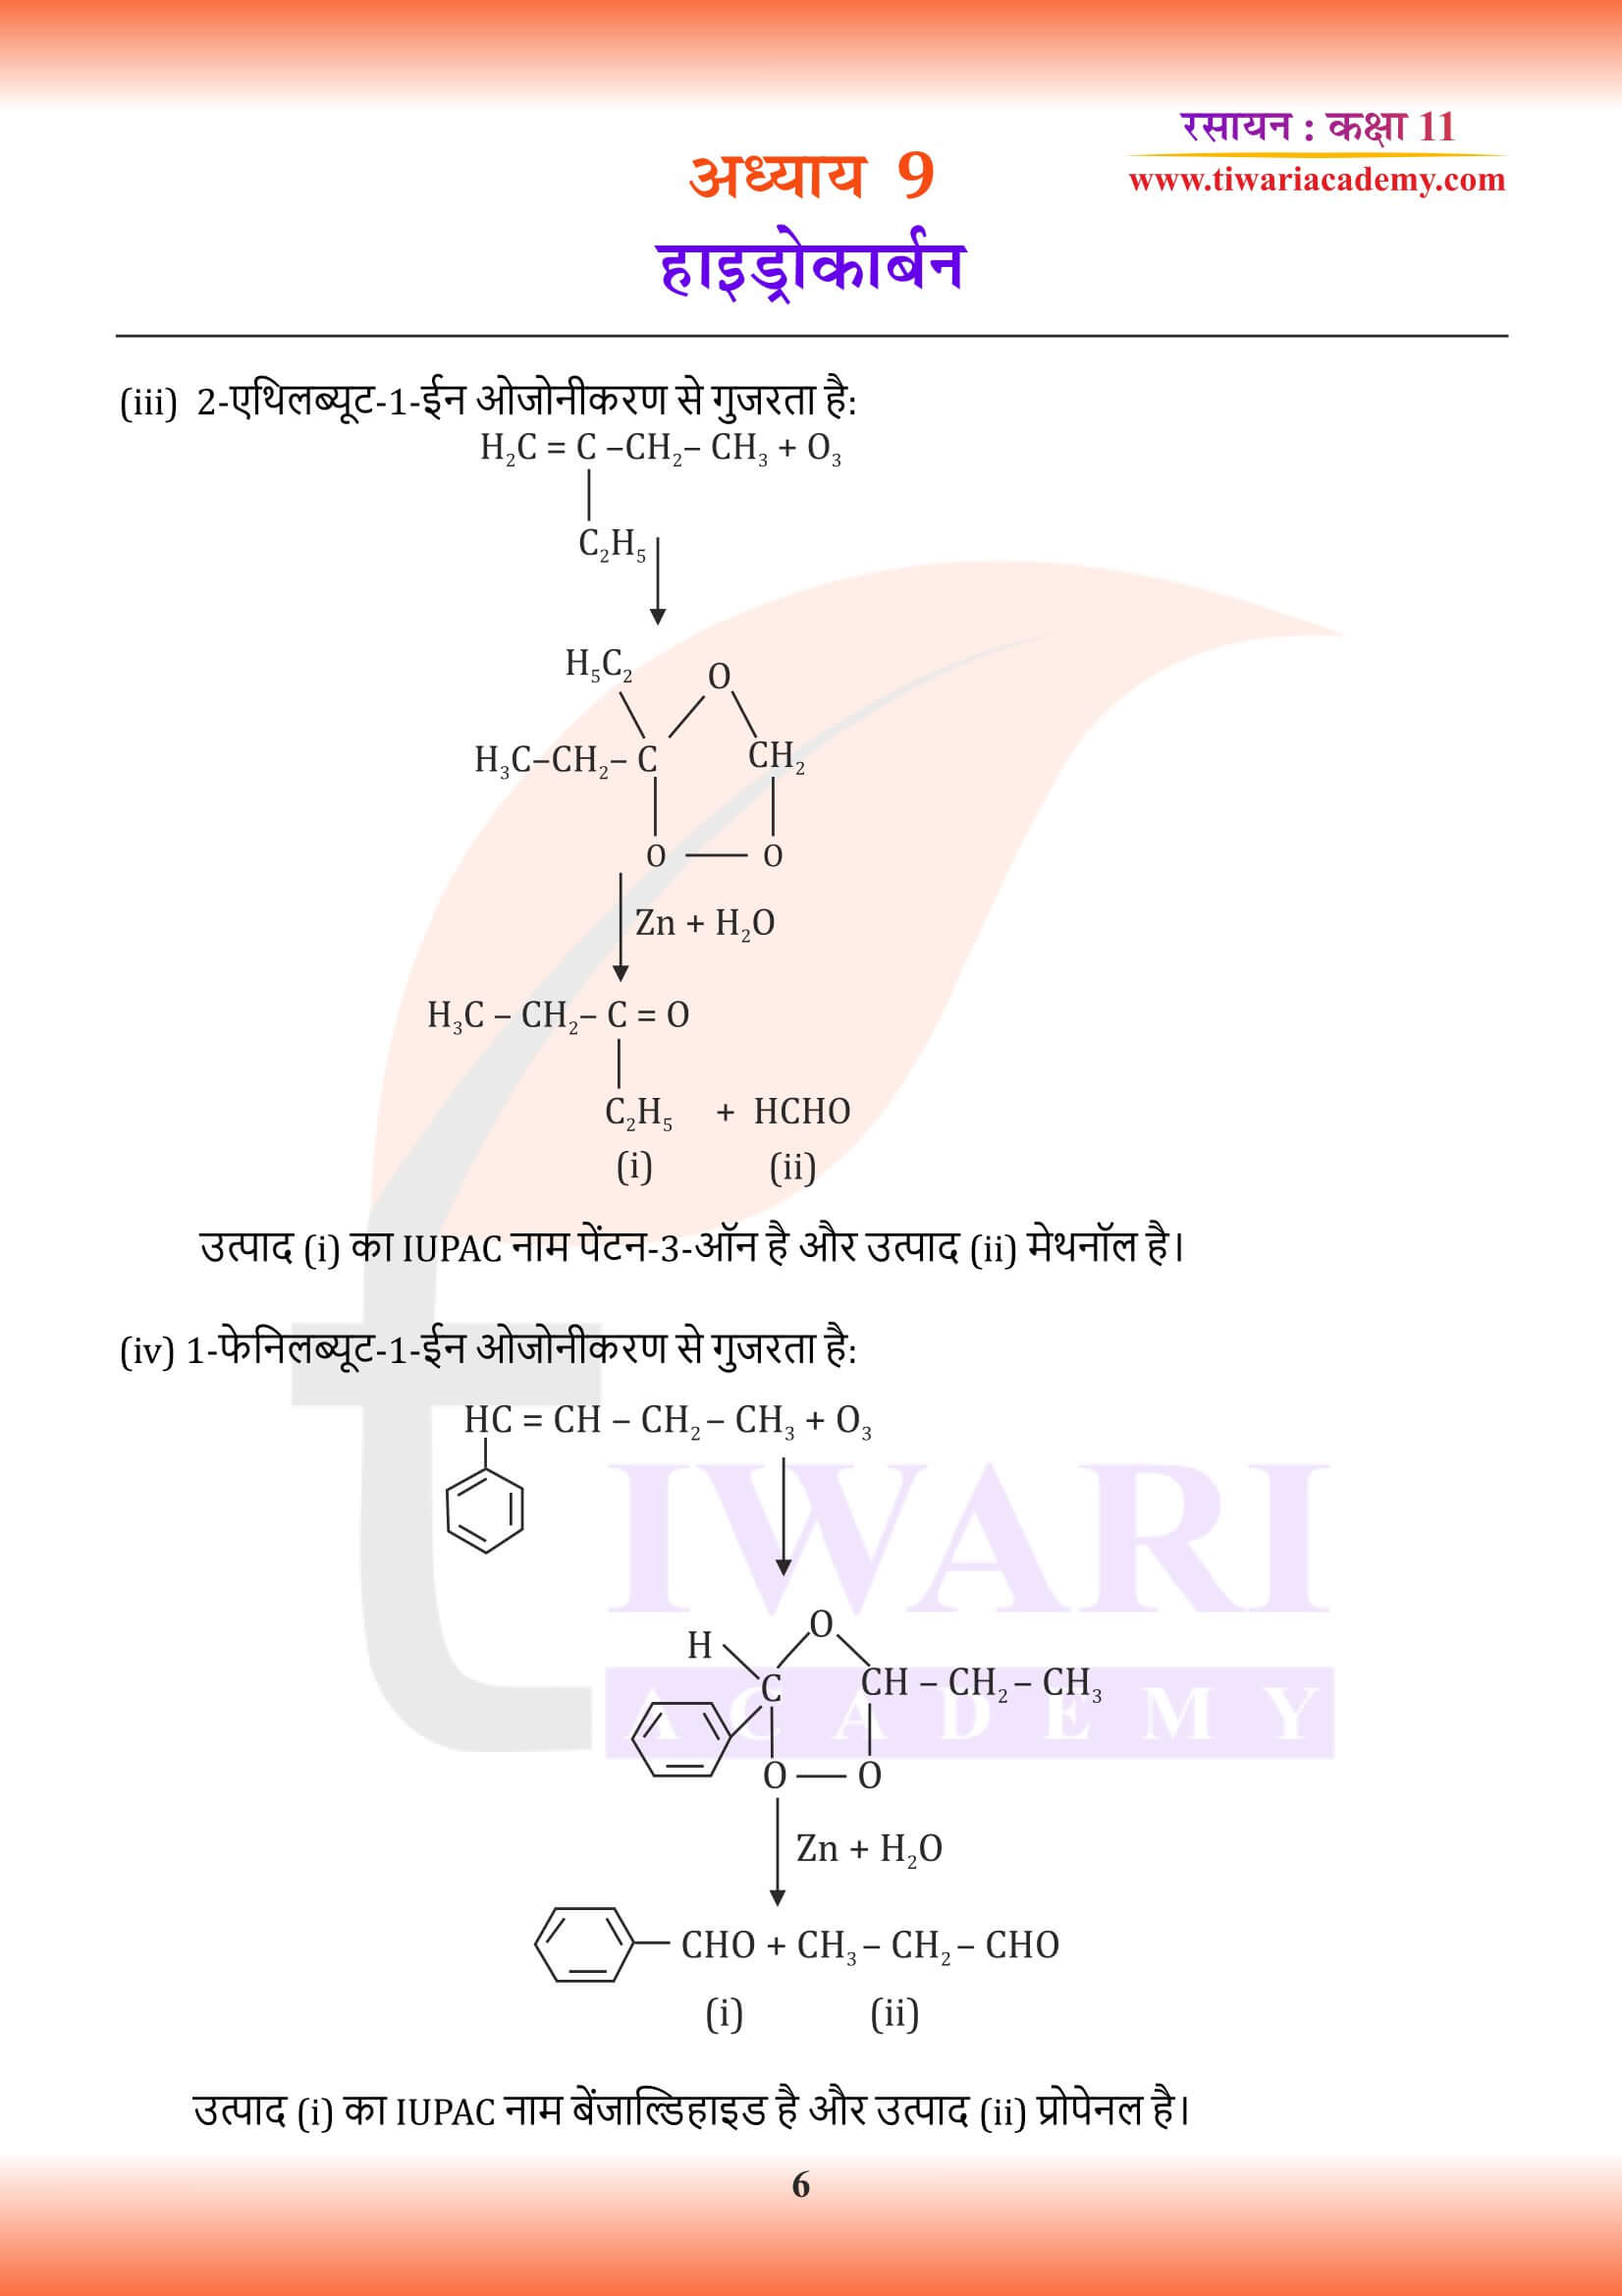 एनसीईआरटी समाधान कक्षा 11 रसायन अध्याय 9 हिंदी मीडियम